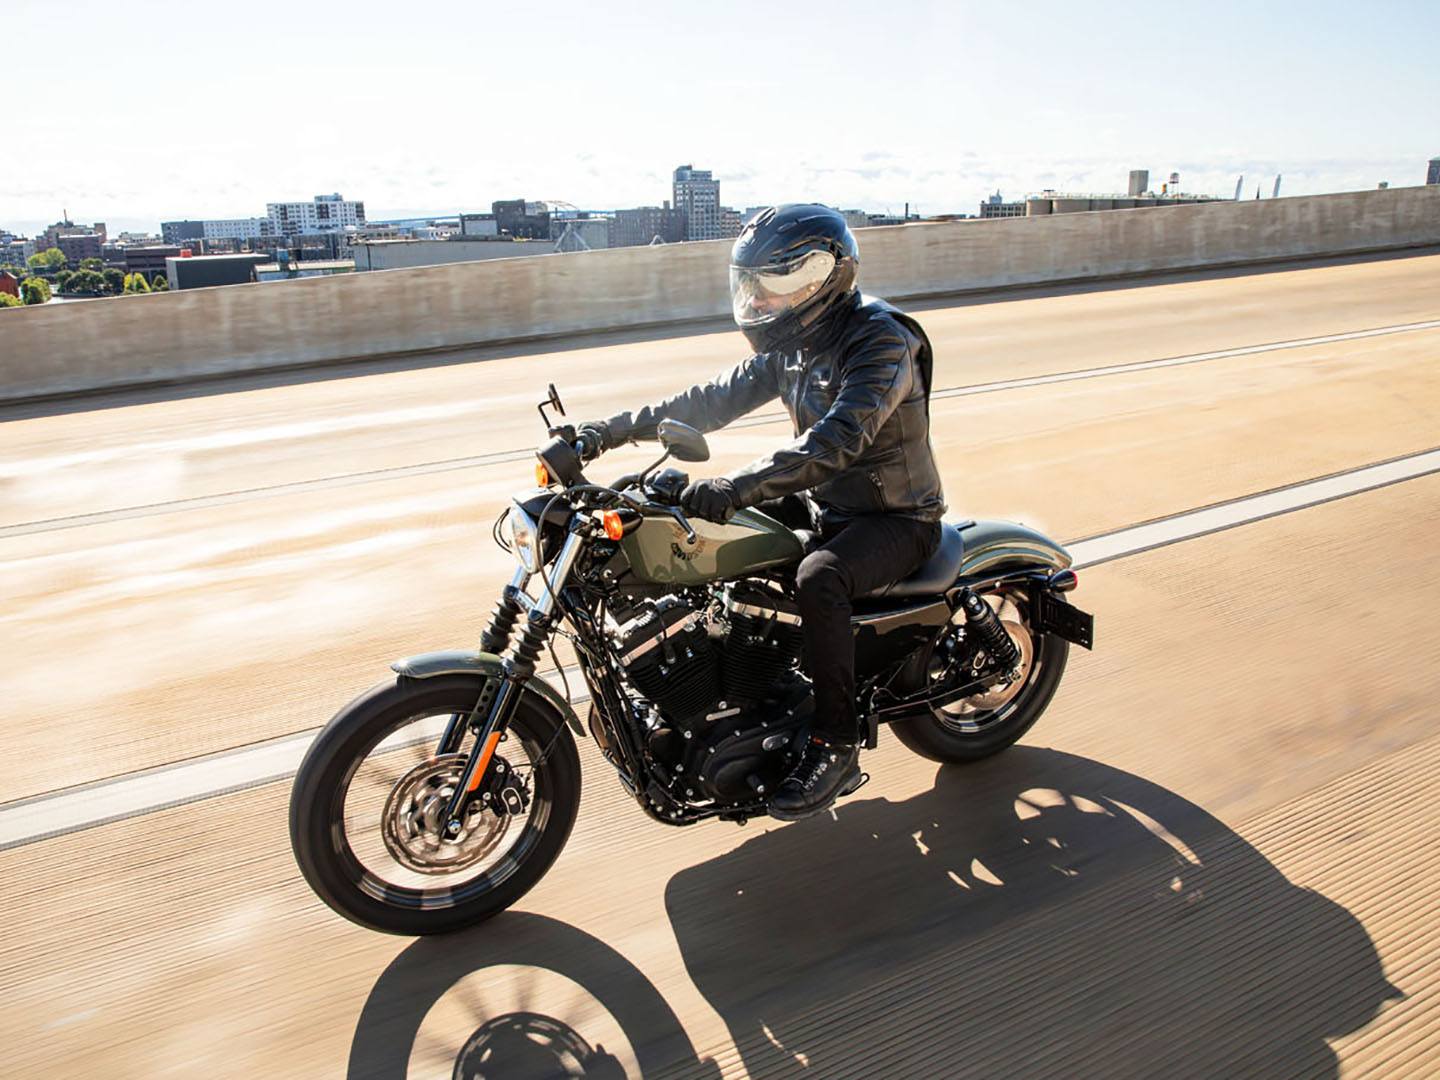 2021 Harley-Davidson Iron 883™ in Grand Prairie, Texas - Photo 11